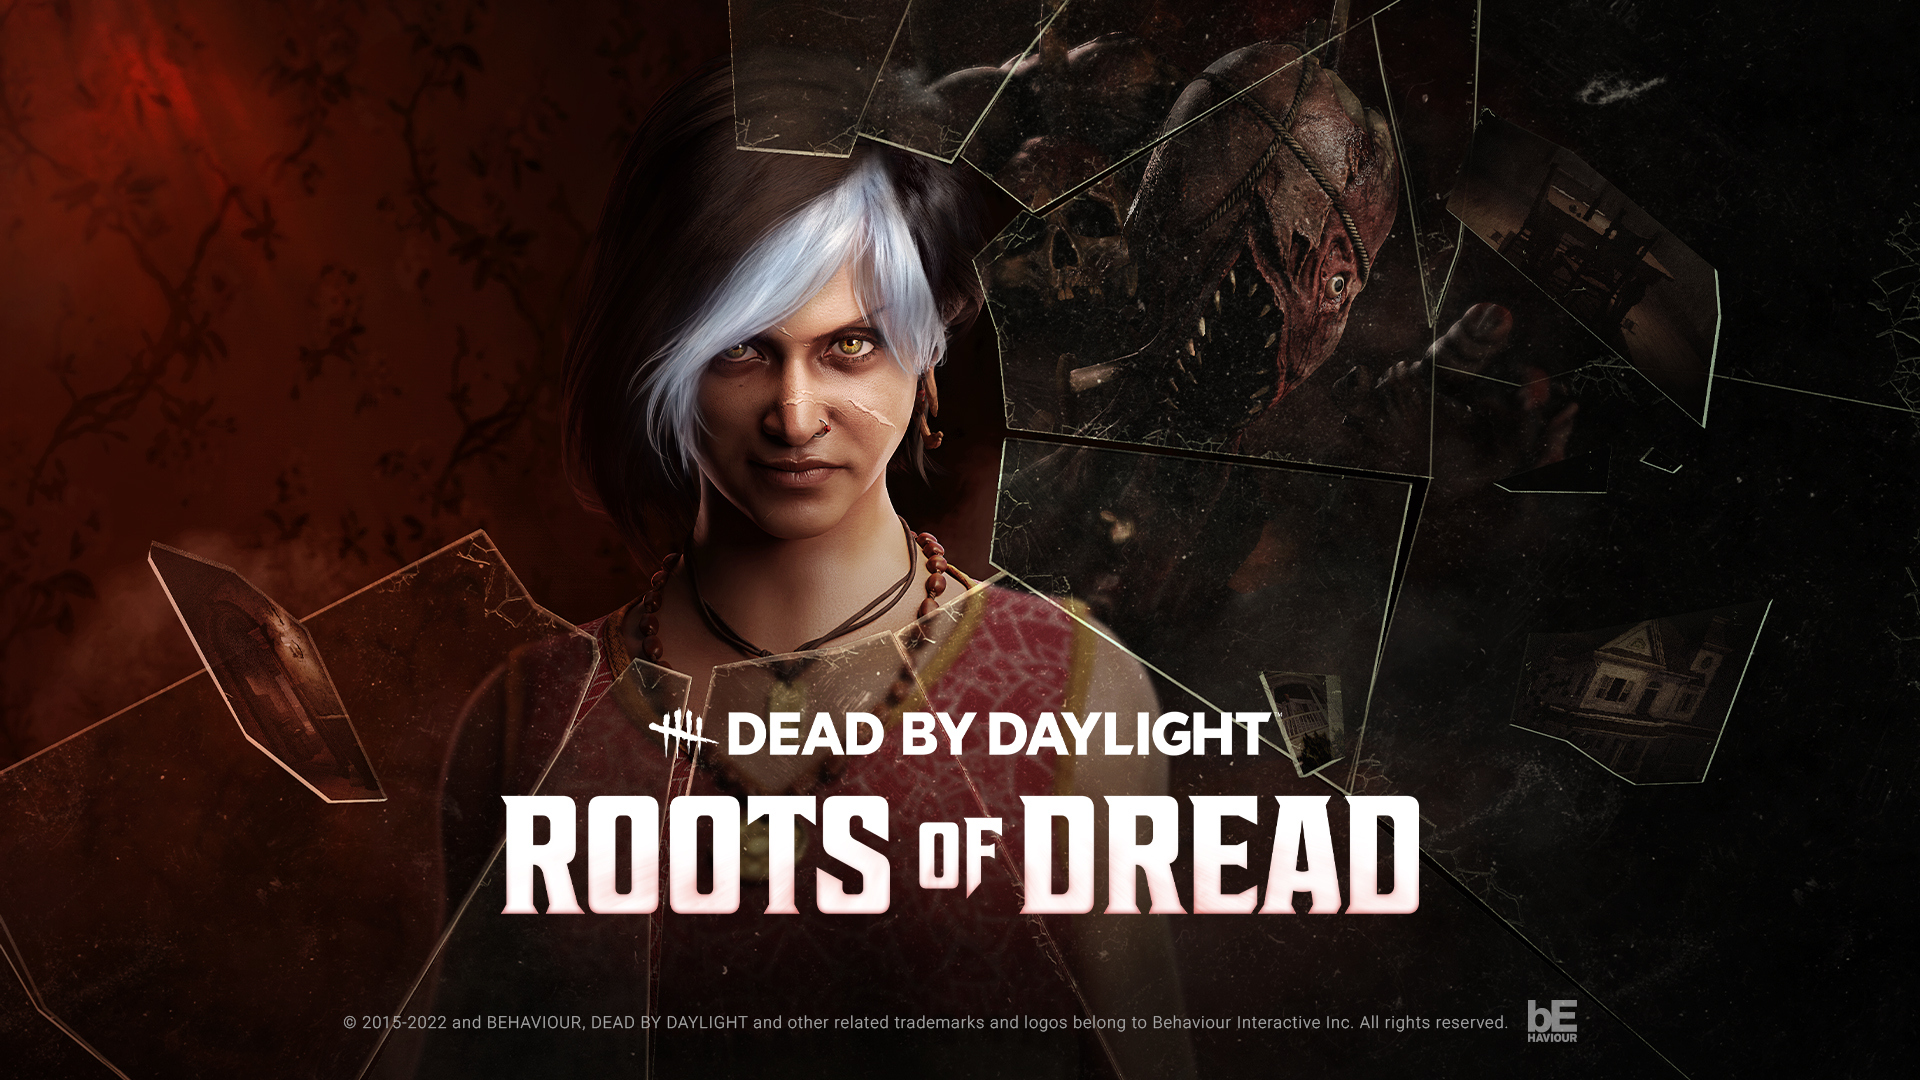 Dead by Daylight เปิดตัว DLC ใหม่ในชื่อ ‘Roots of Dread’ พร้อมประกาศจับมือร่วมกับ Attack on Titan ในการทำสกินพิเศษใหม่เข้ามาในตัวเกม